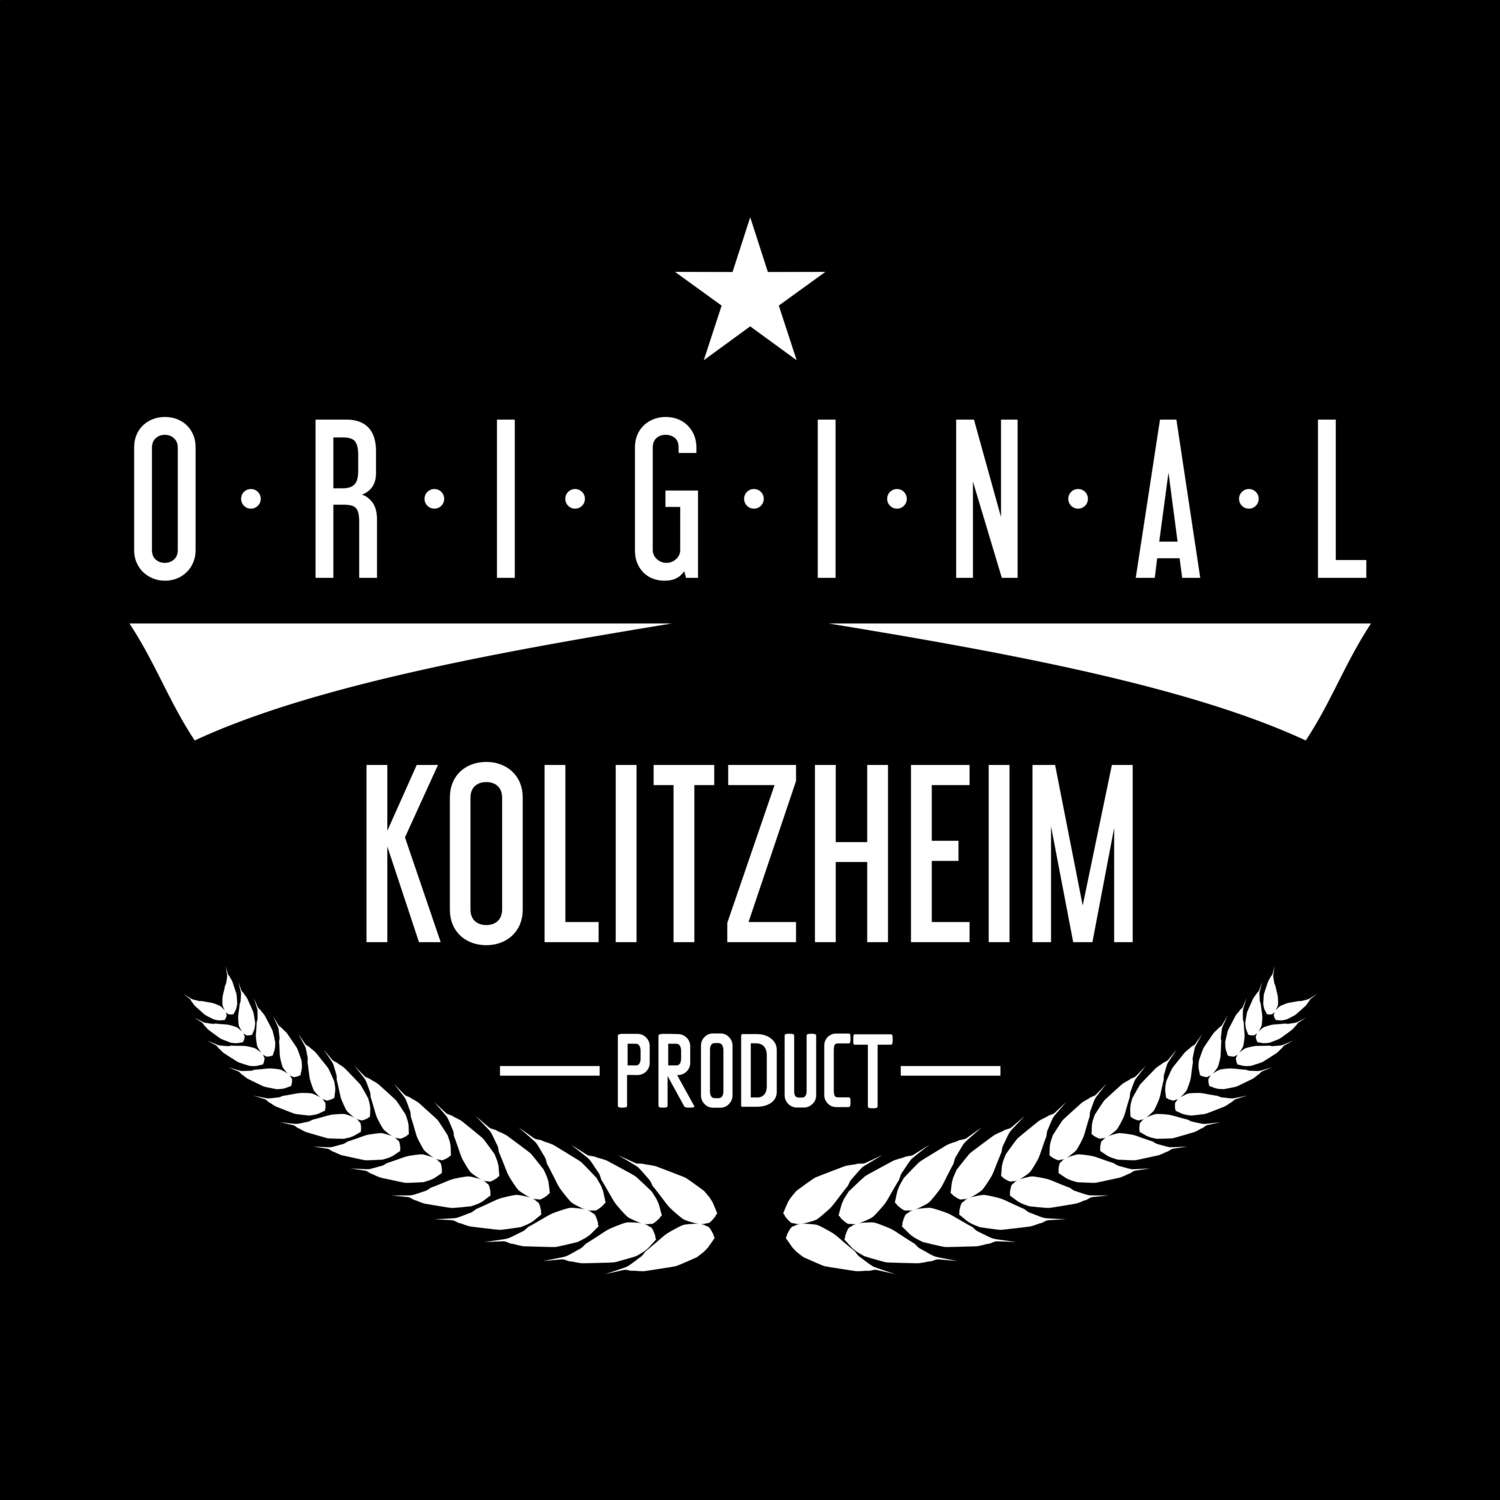 Kolitzheim T-Shirt »Original Product«